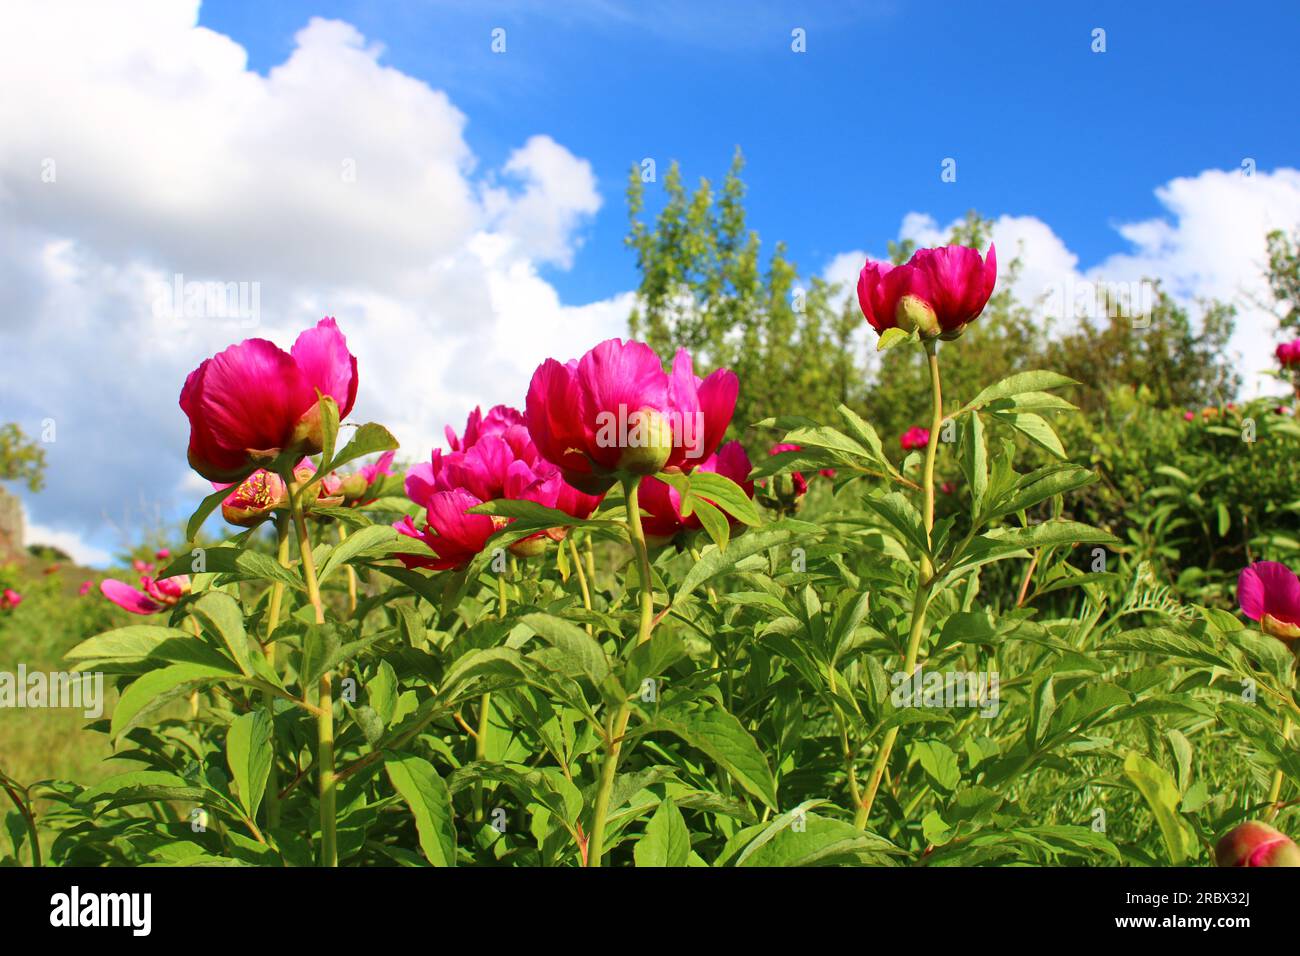 endemic tulip native to the city of yozgat. Stock Photo